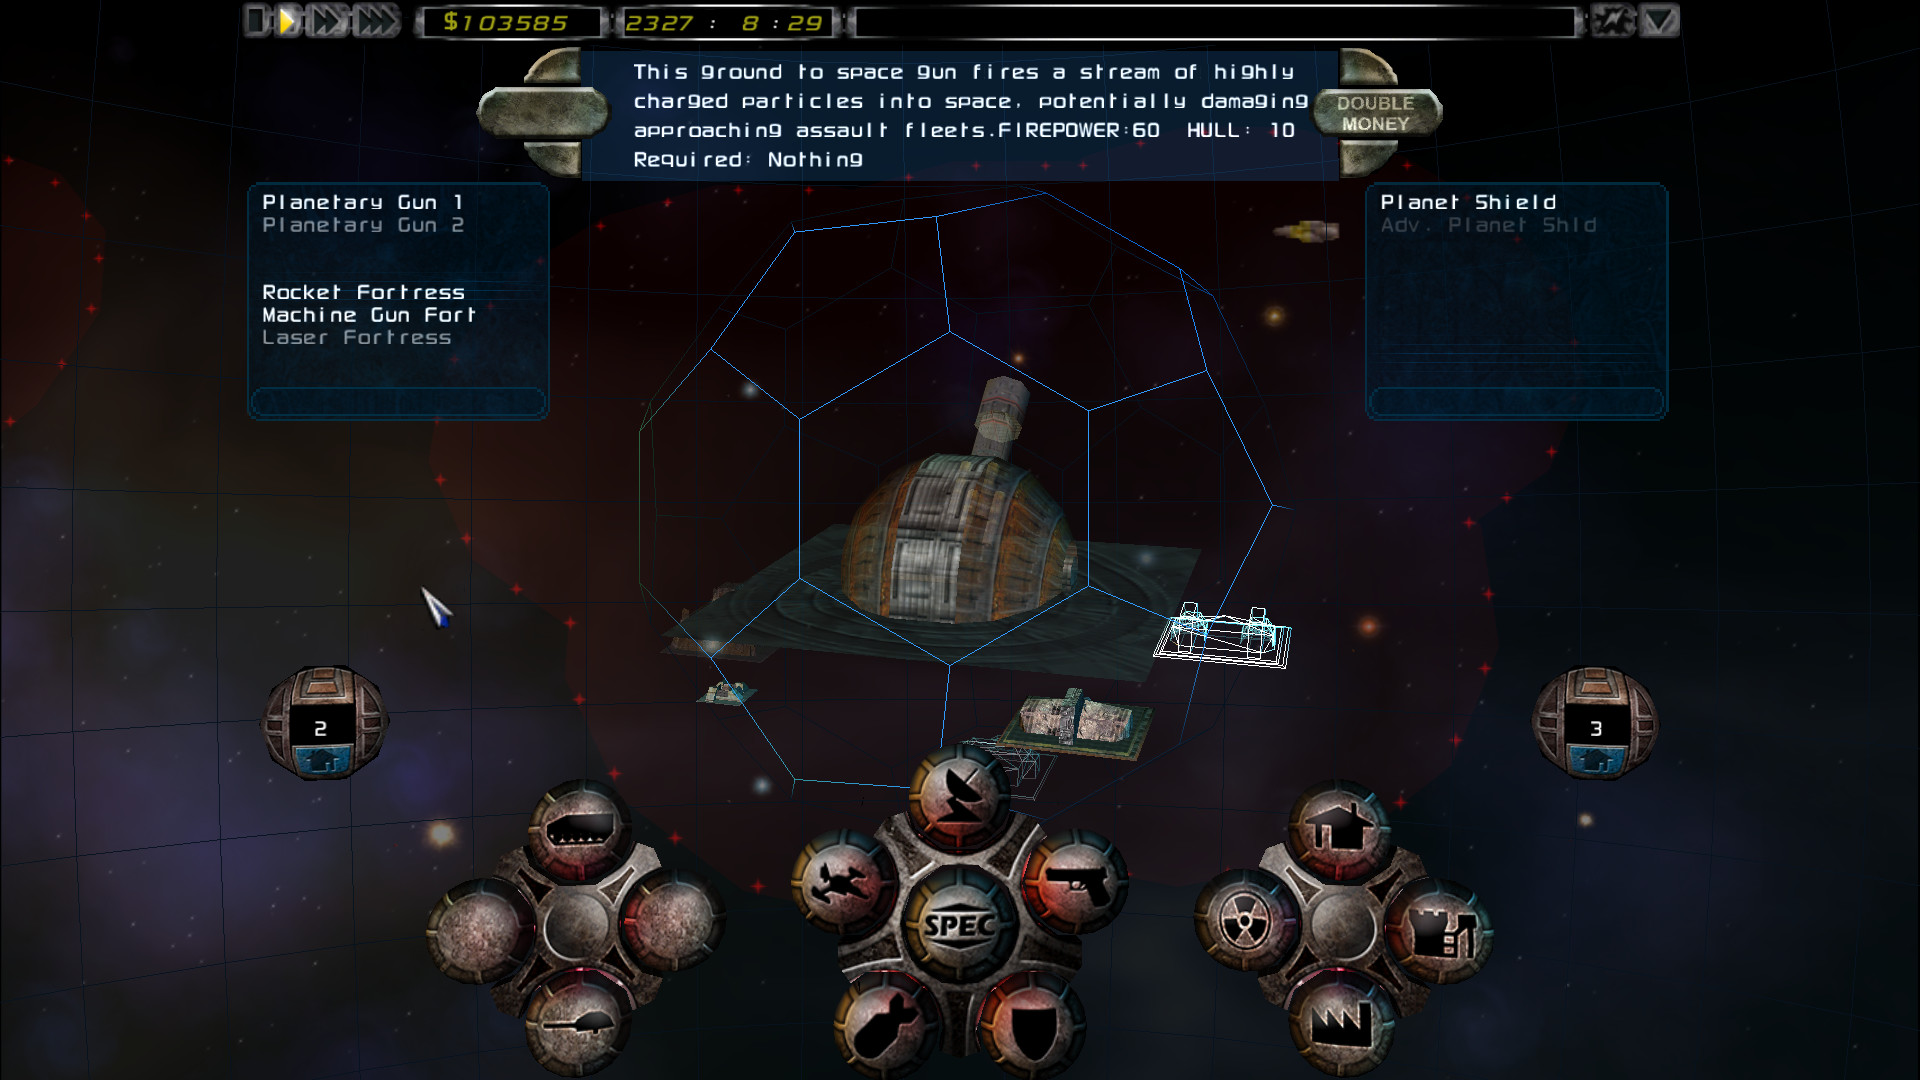 imperium galactica 2 download full game free